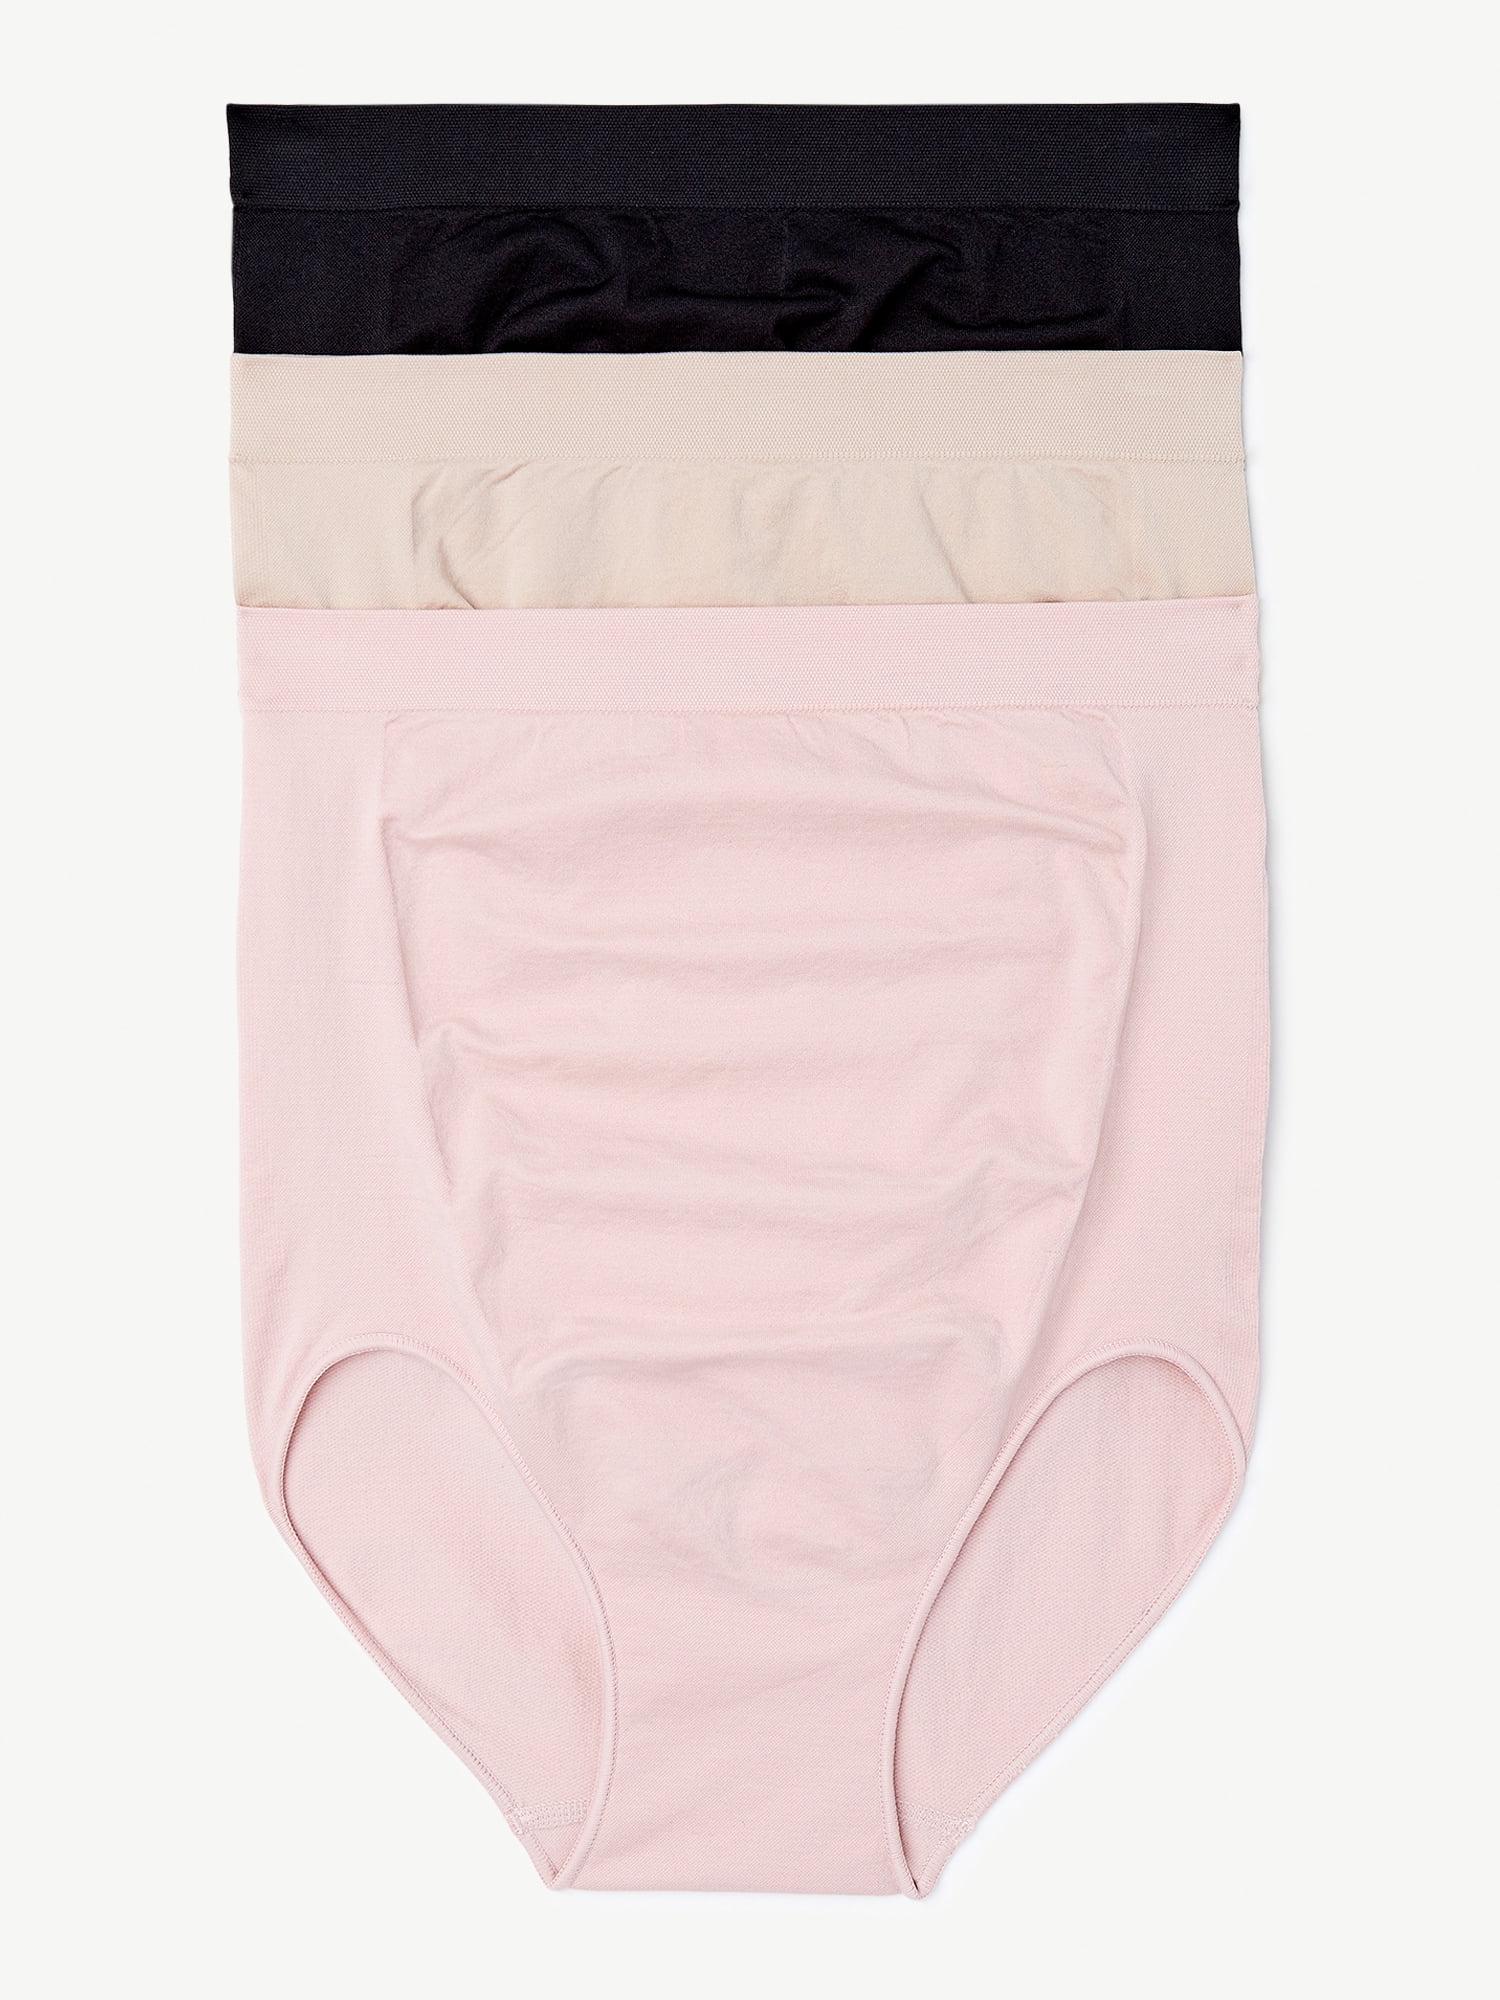 Joyspun Women's Cotton Brief Panties, 6-Pack, Sizes M to 3XL - DroneUp  Delivery